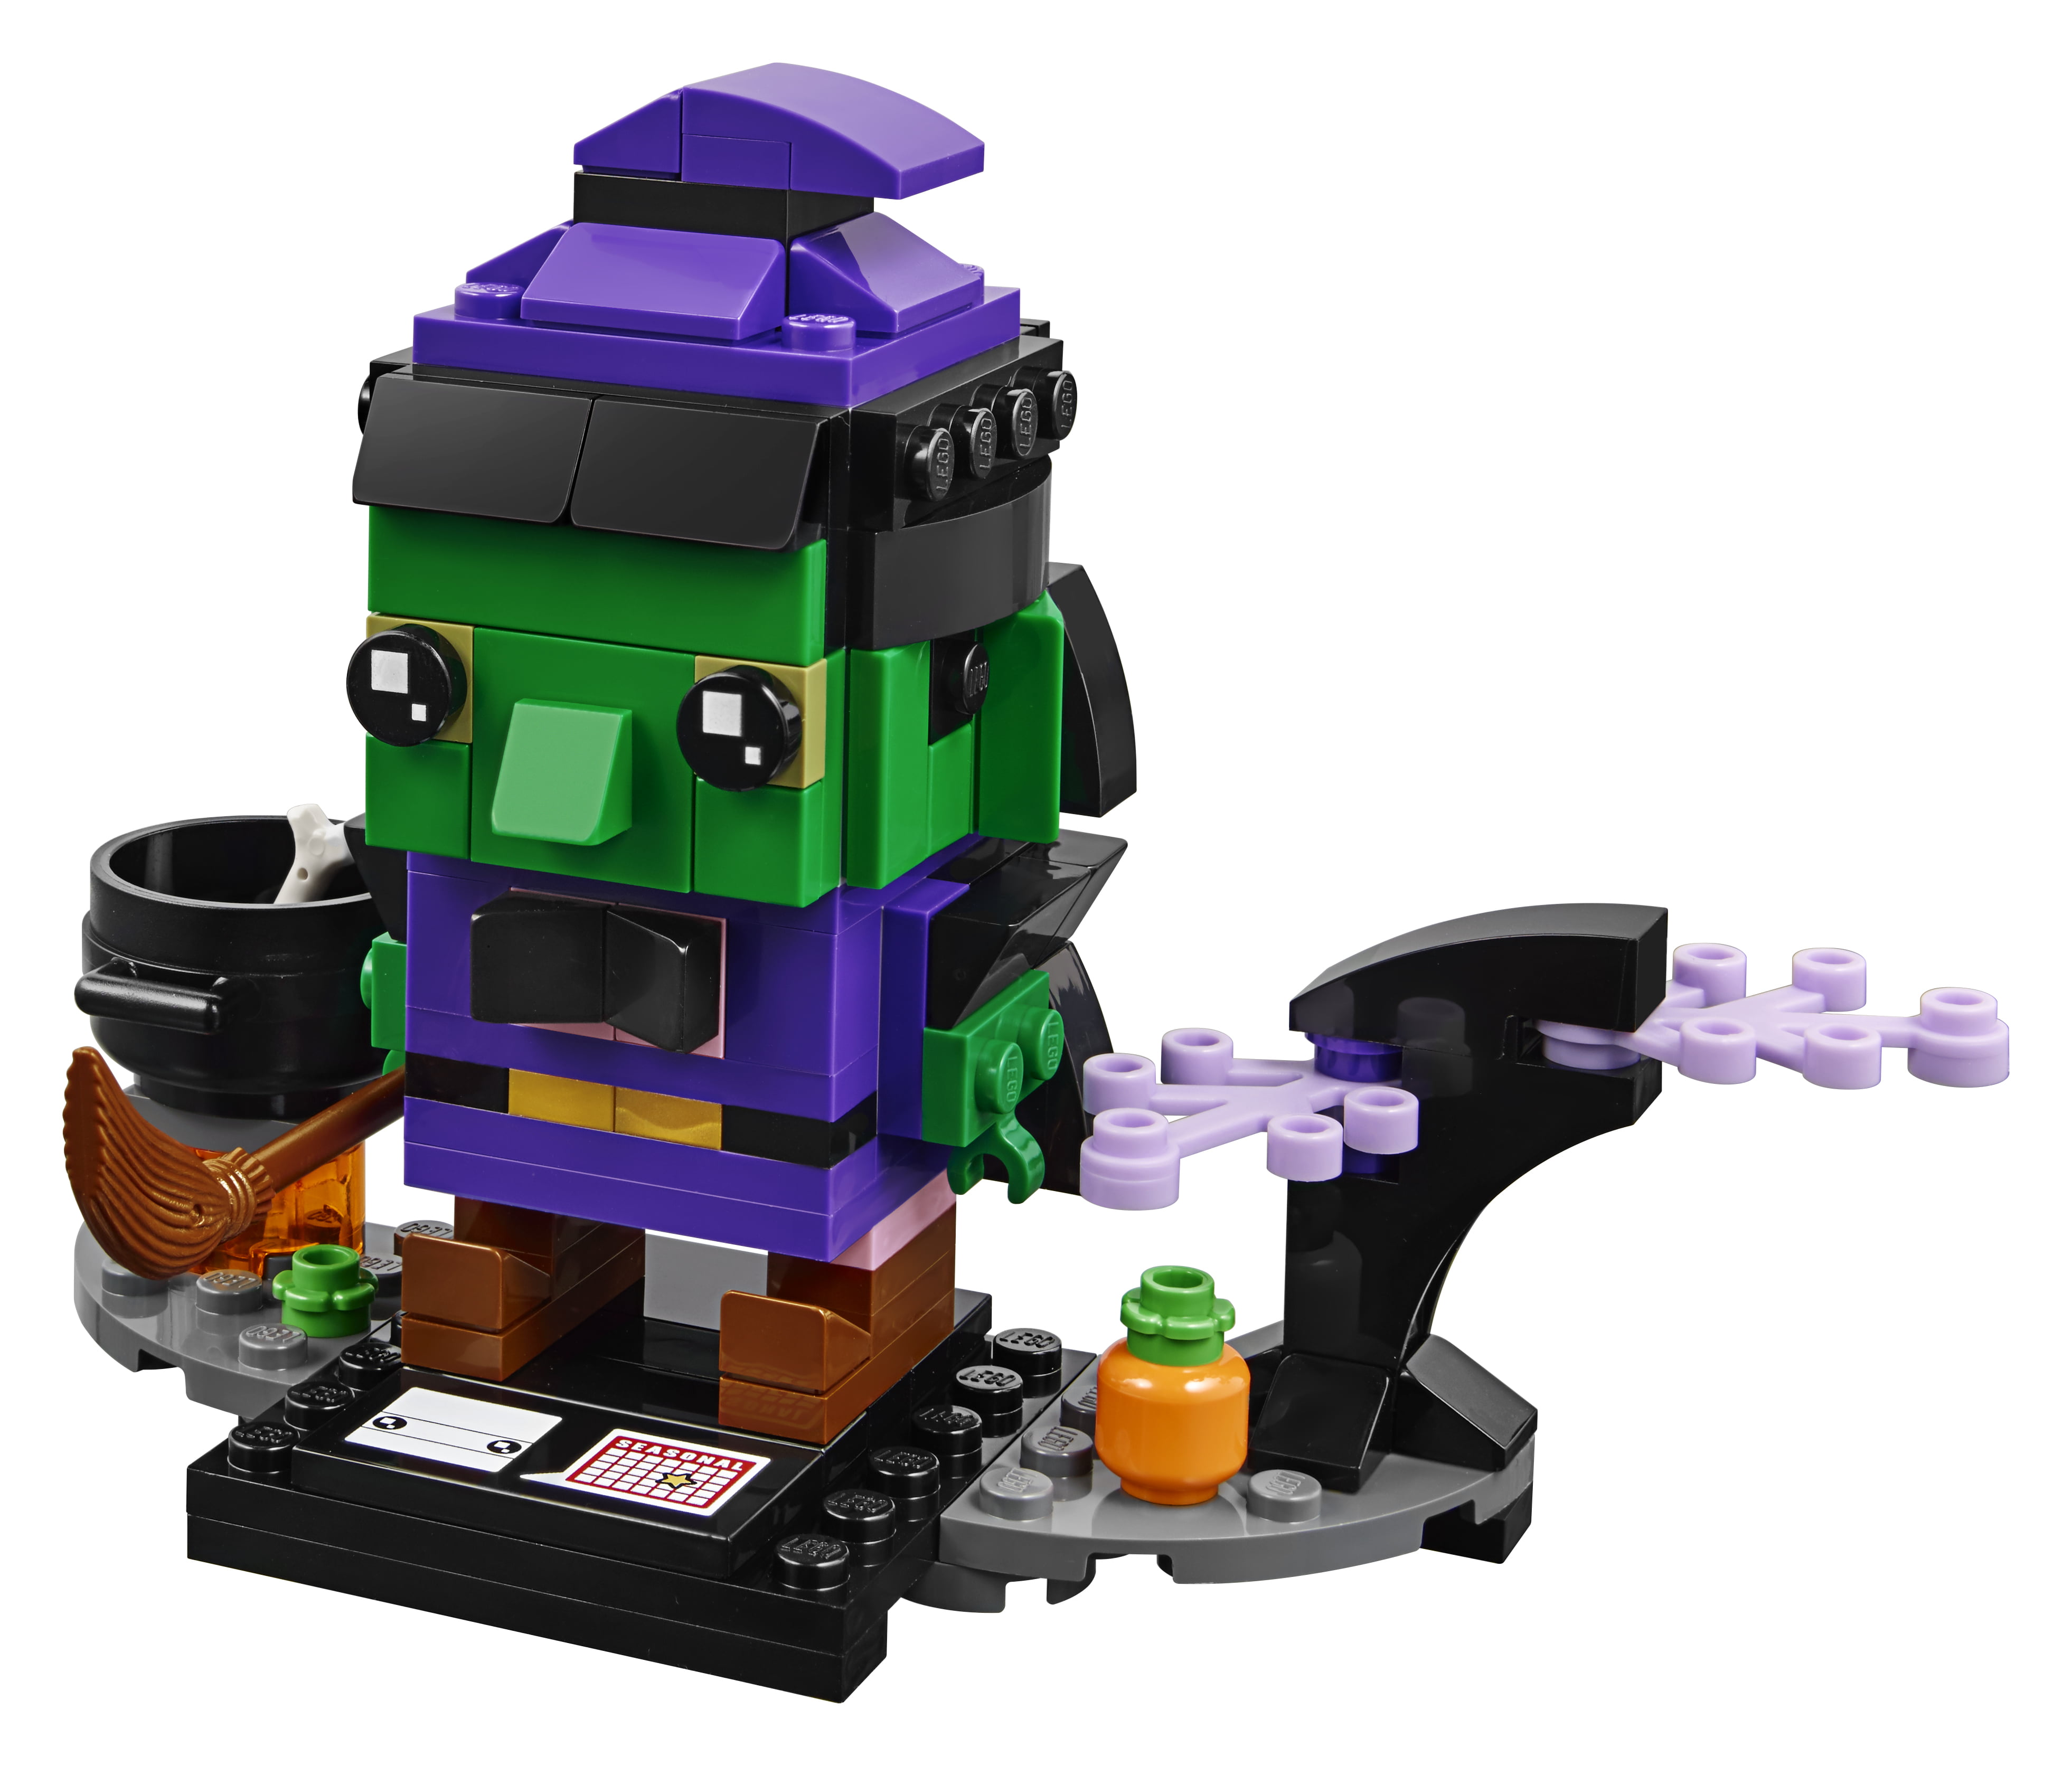 Brickheadz 40272 Seasonal Halloween Witch New Halloween LEGO ® 